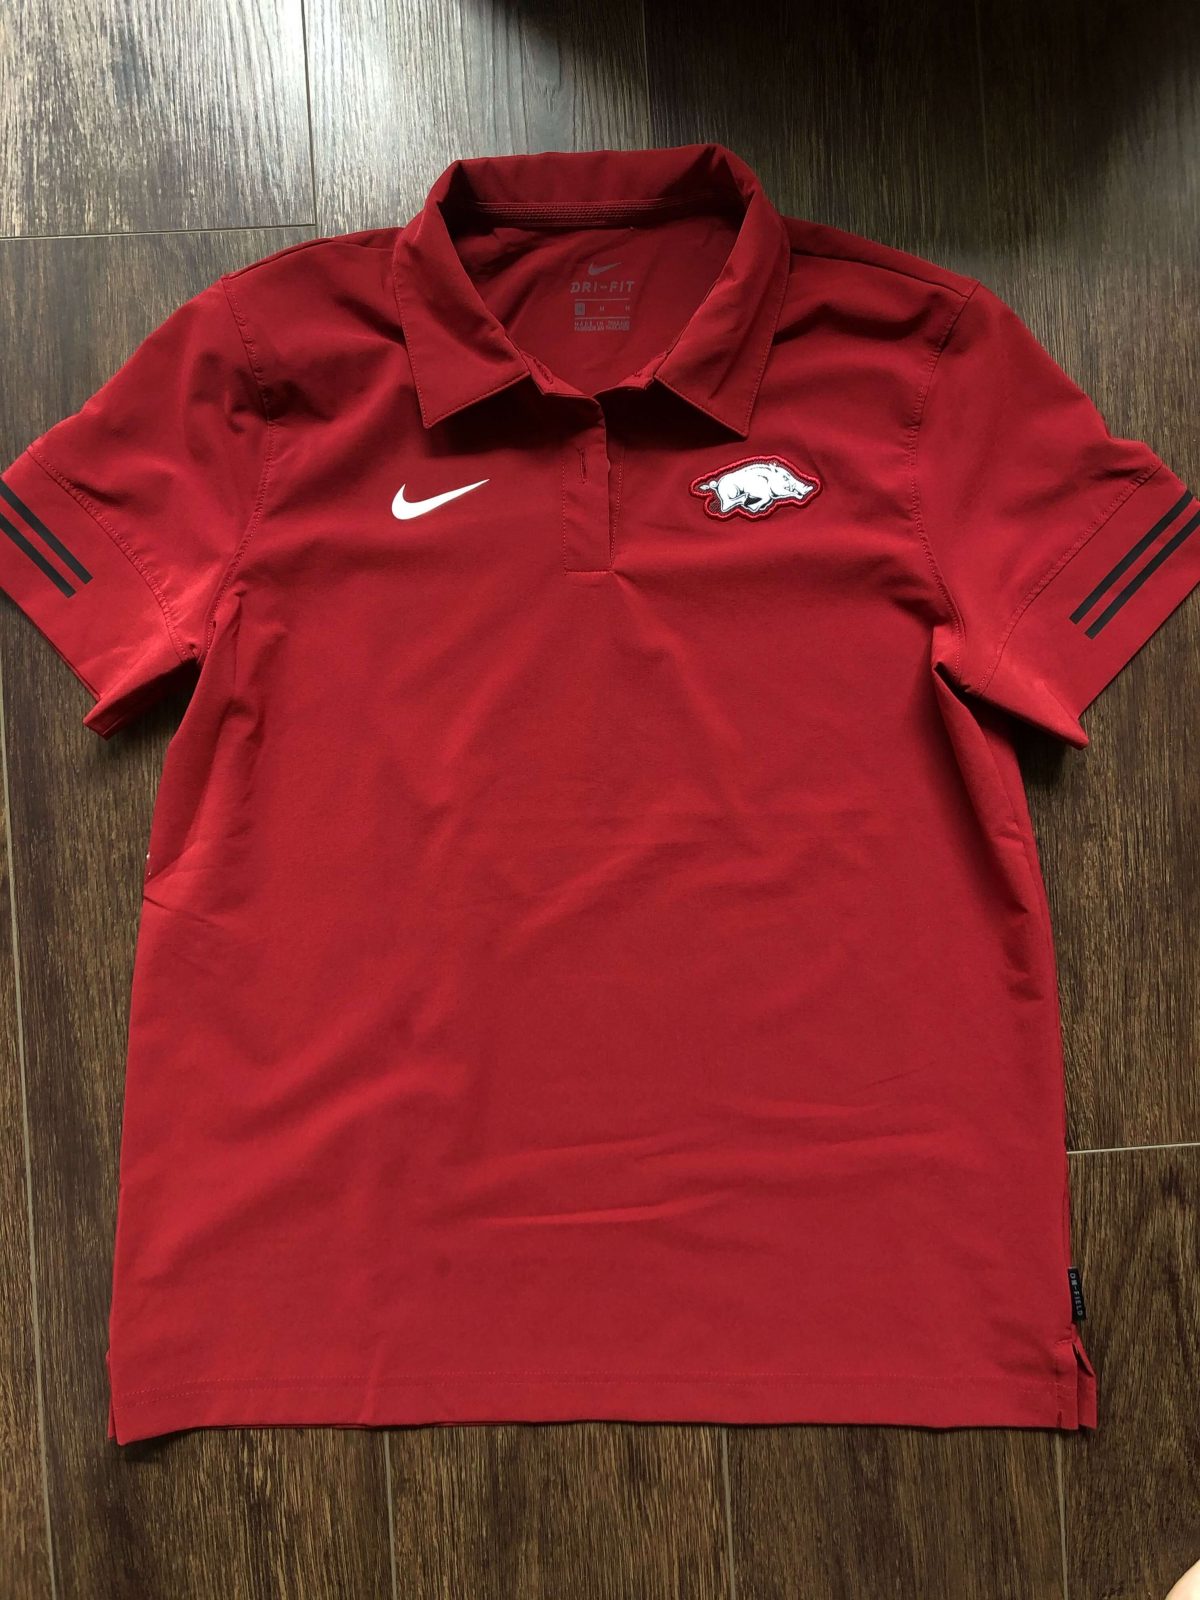 University of Arkansas Nike Polo : NARP Clothing